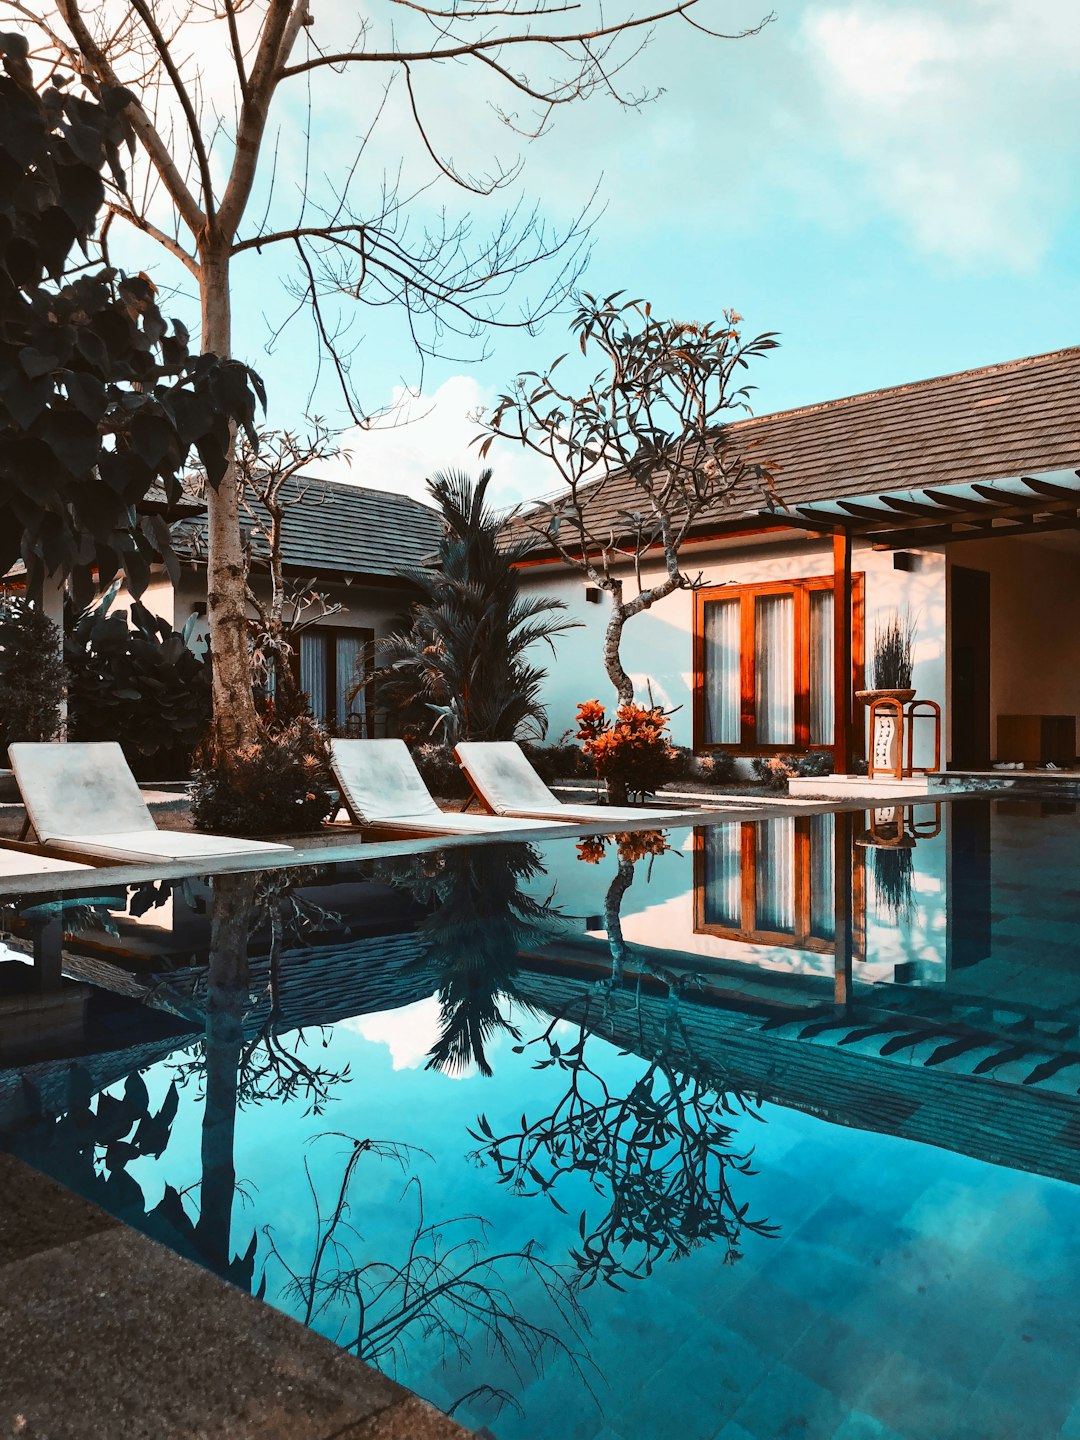 Resort photo spot Bali Indonesia